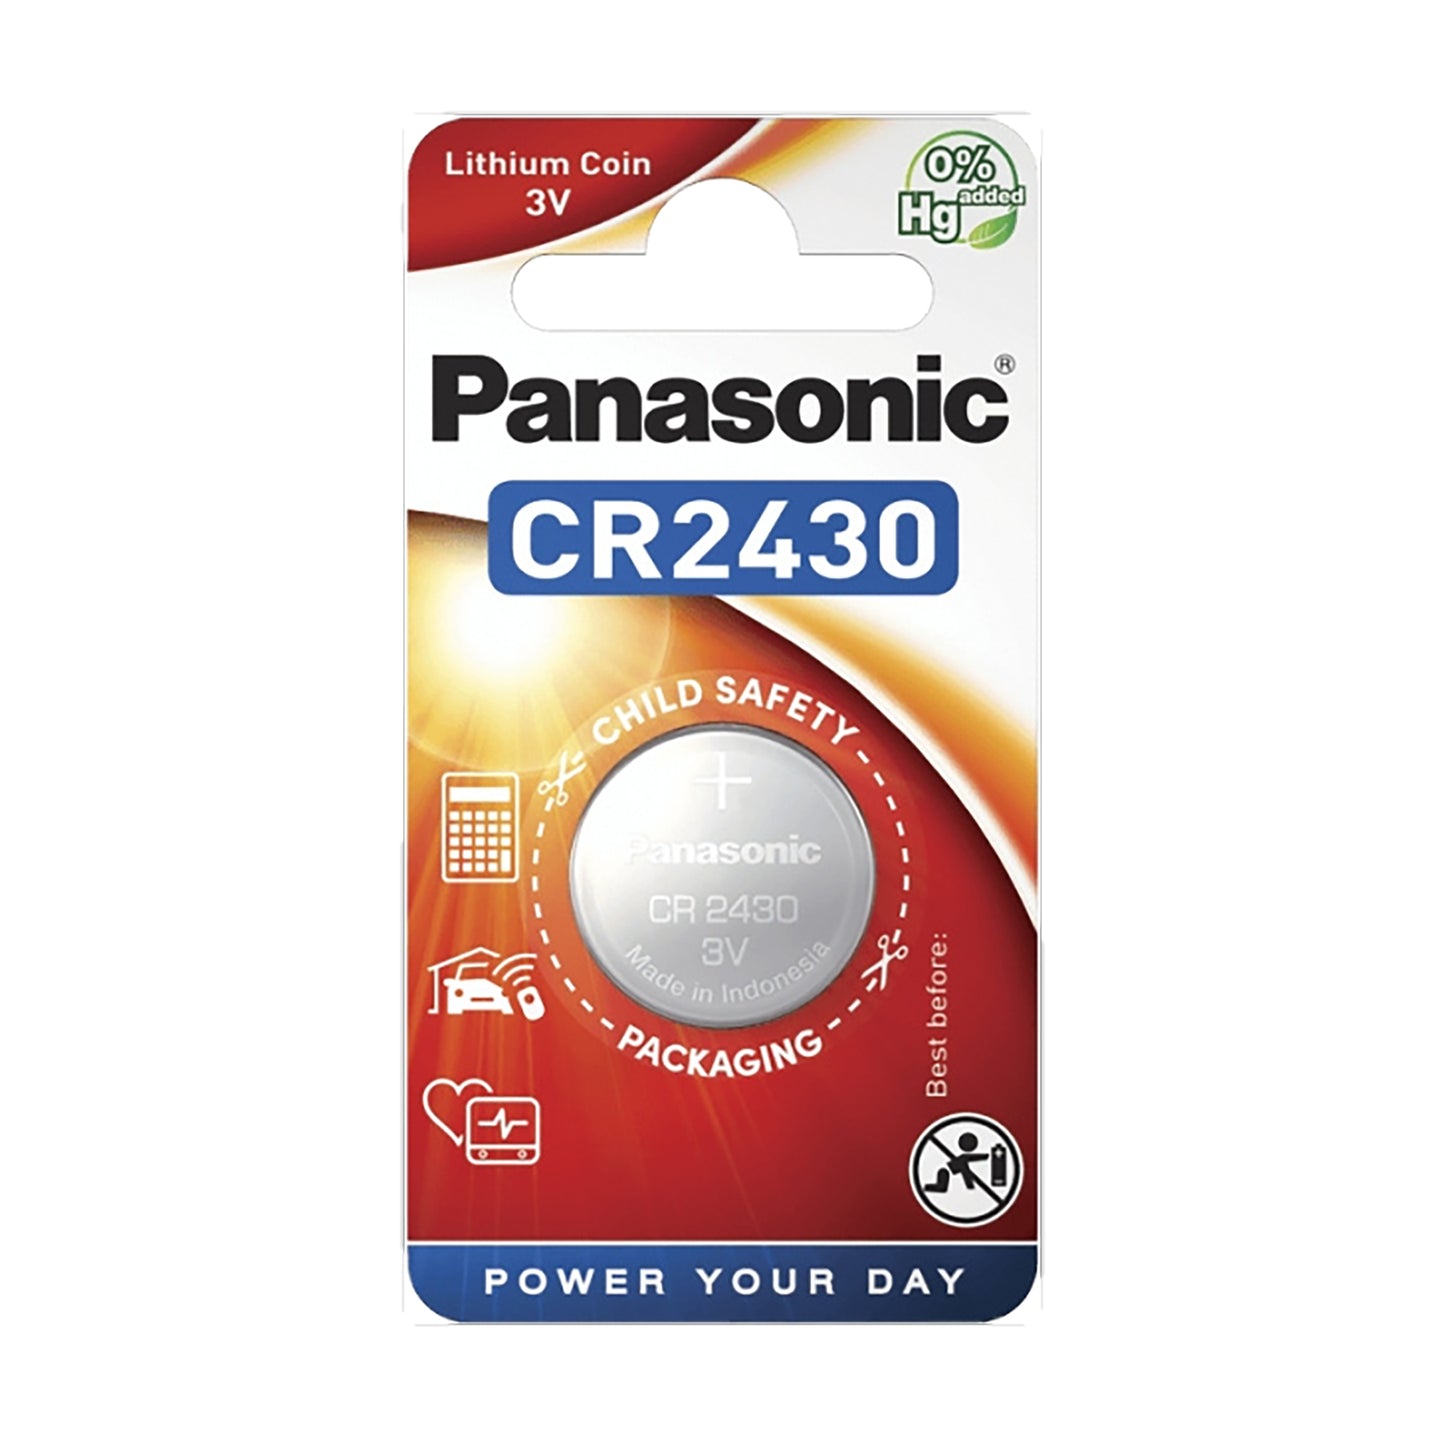 PAN-CR2430-1 - батарейка Panasonic CR2430, 3 В (1 шт. в блистере)